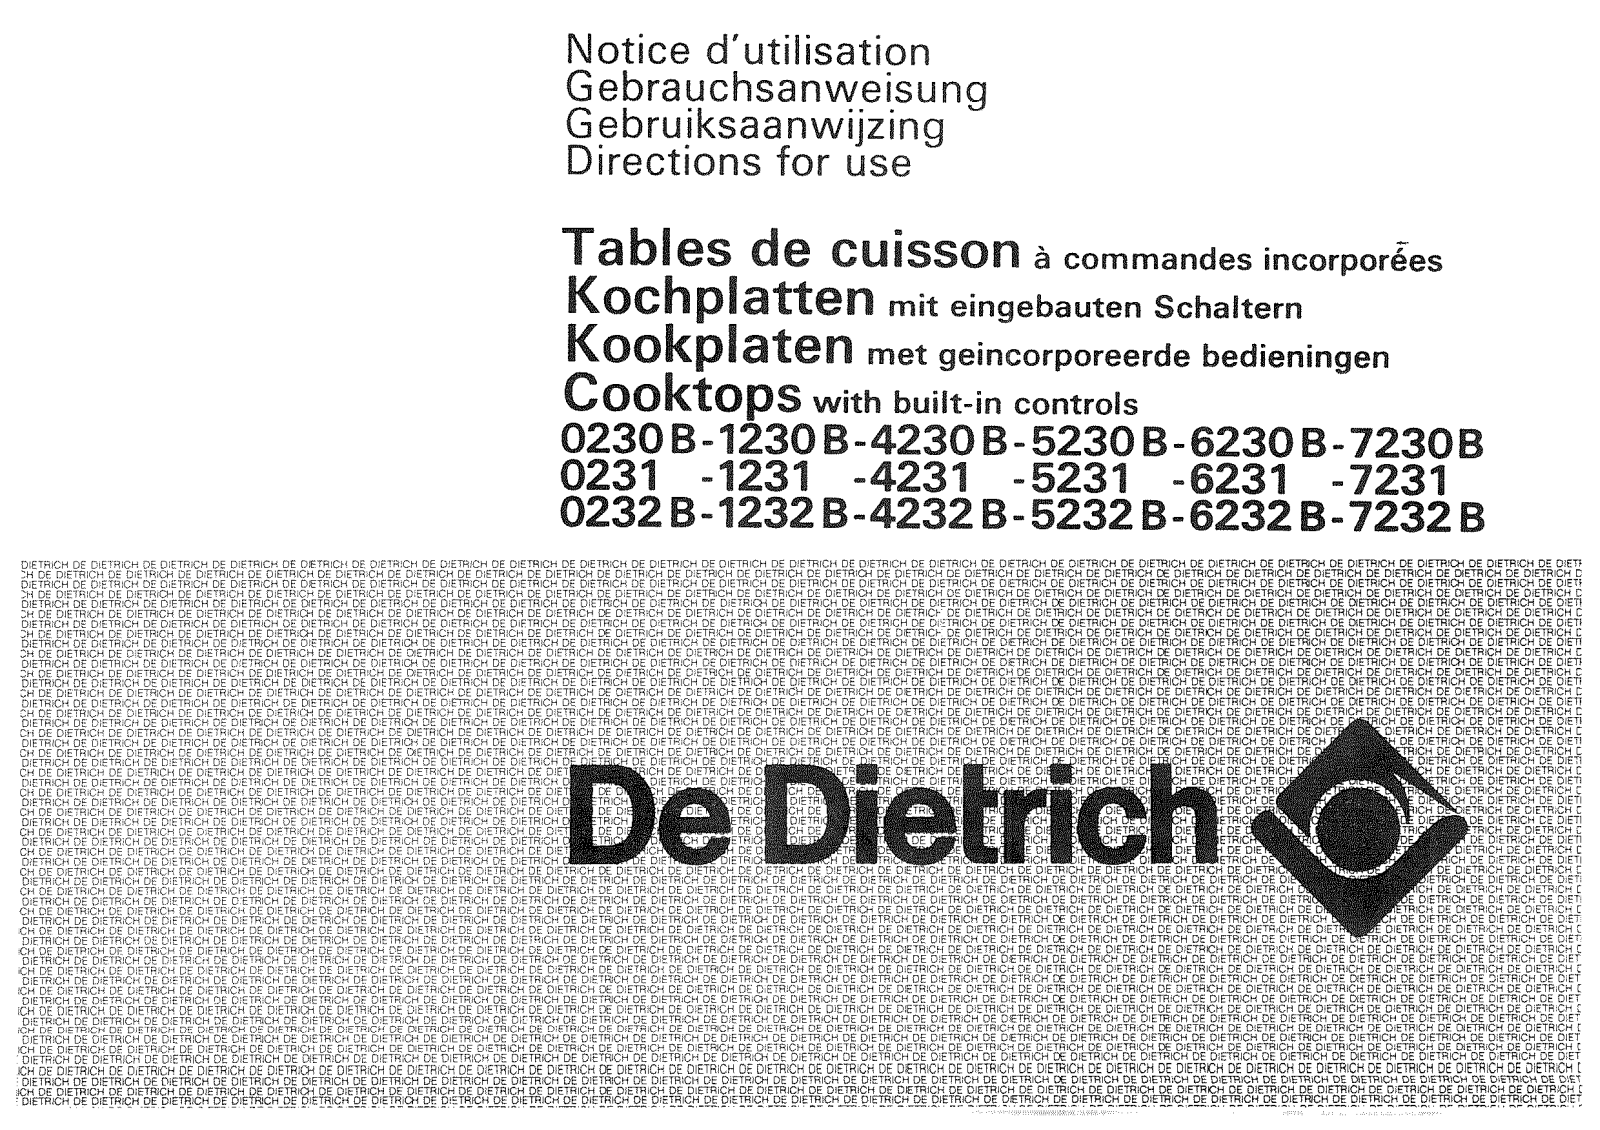 De dietrich 5232B, 4231, 232B, 6232B, 7232B User Manual